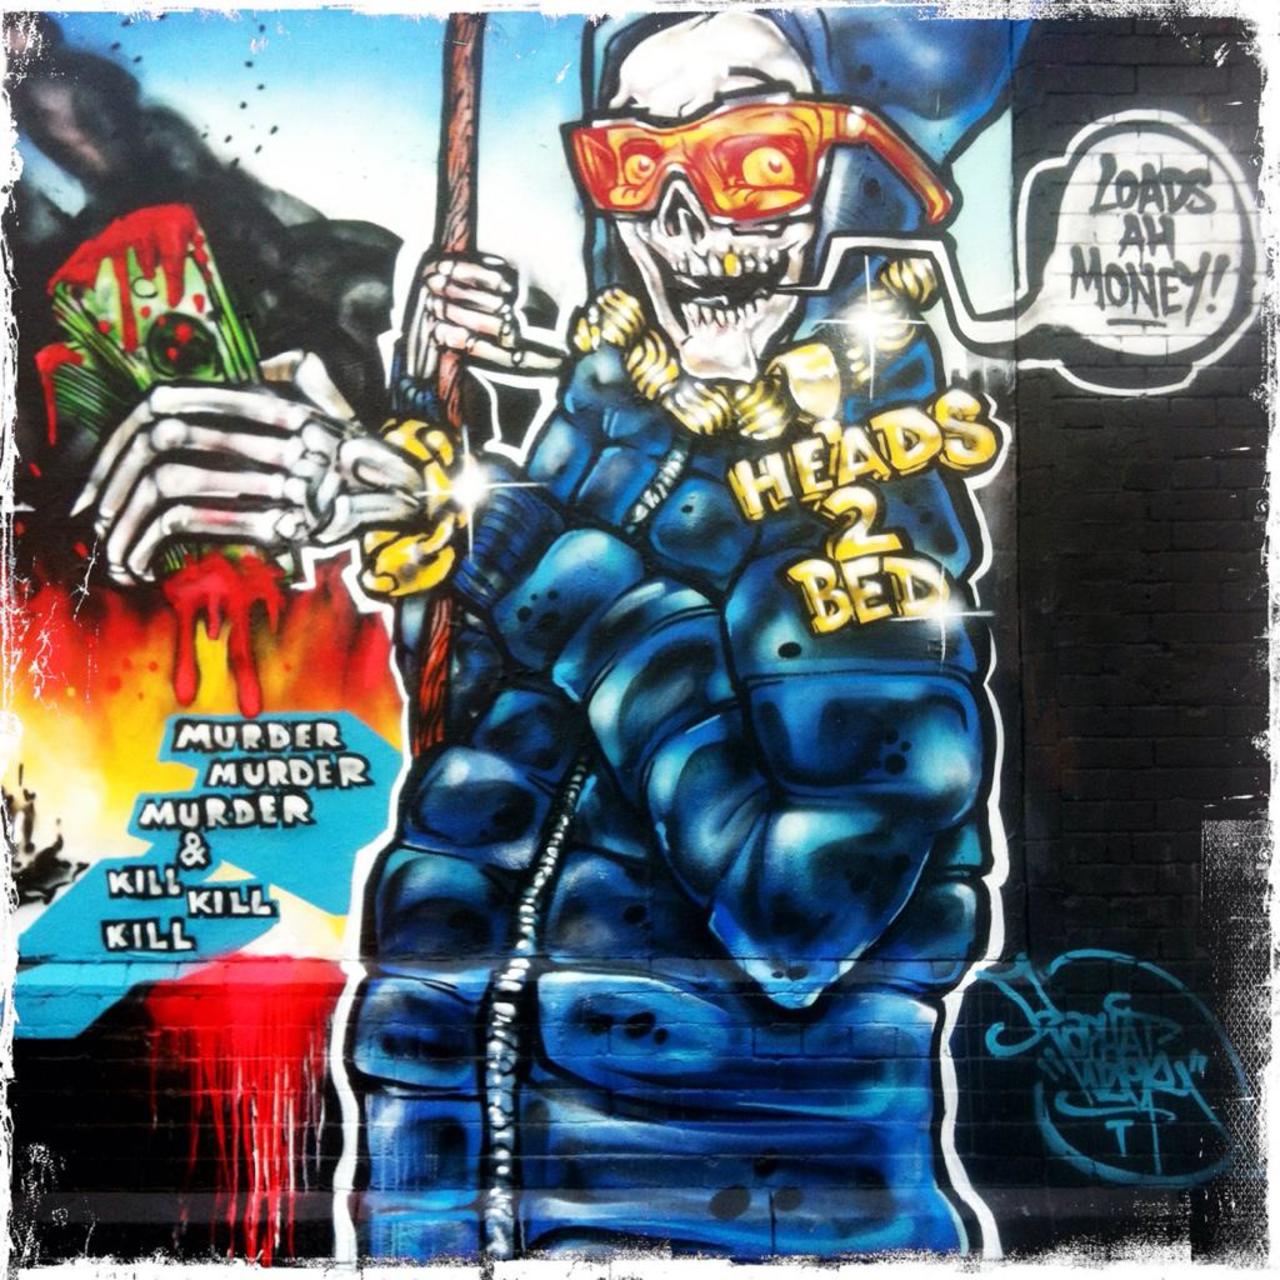 Murder Murder Murder - @tizerone with at the Shoreditch Art Wall #shoreditchcurtain #streetart #graffiti http://t.co/mHFqfm3TUB